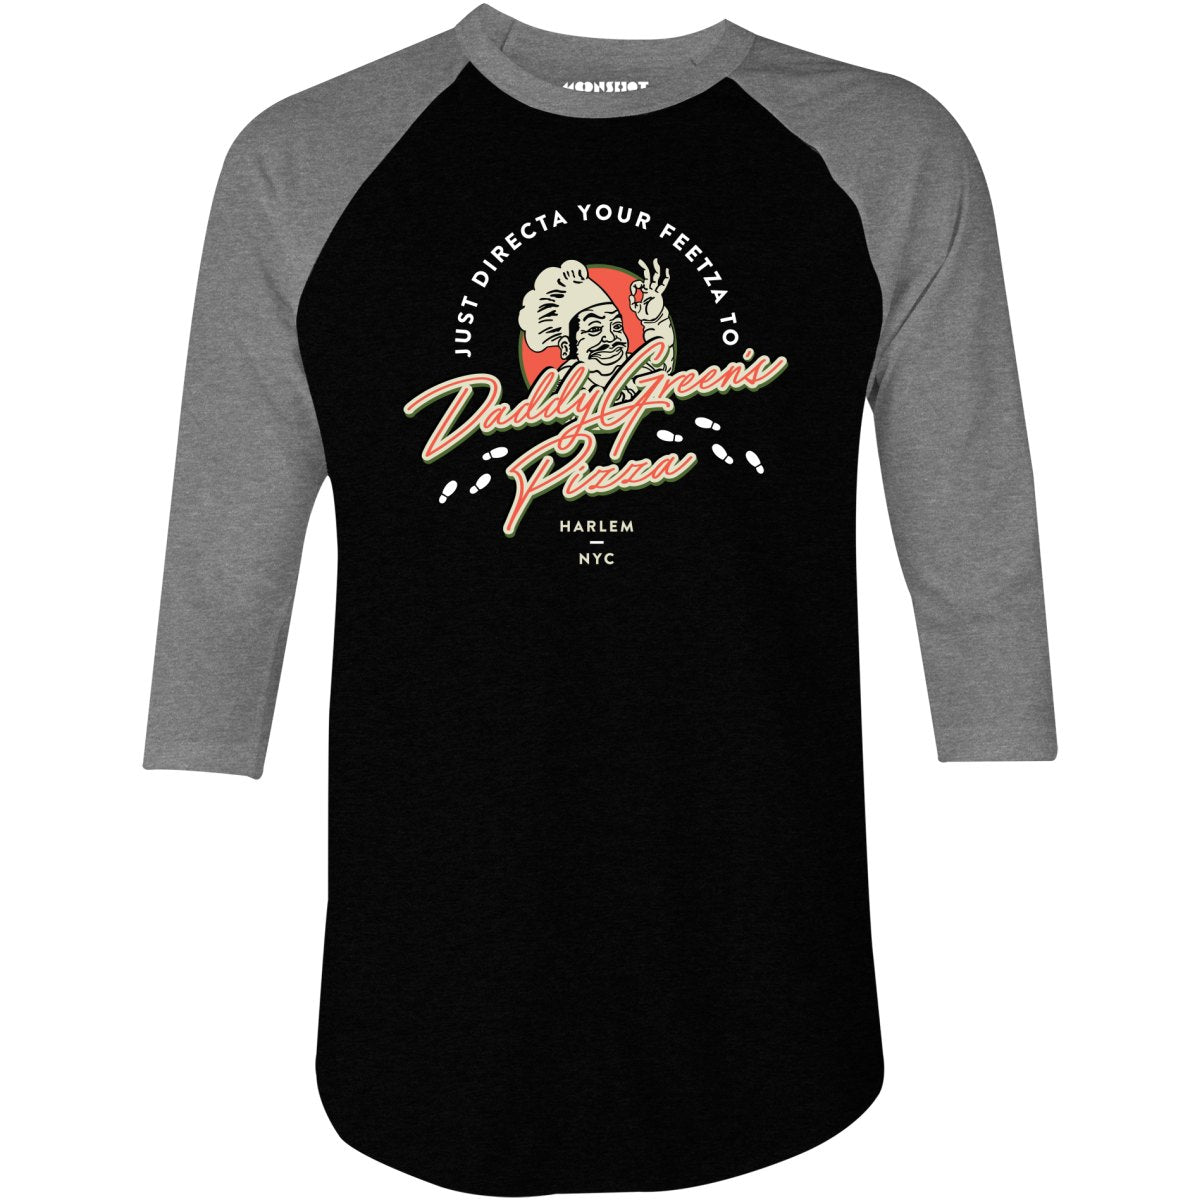 Daddy Green's Pizza - Last Dragon - 3/4 Sleeve Raglan T-Shirt